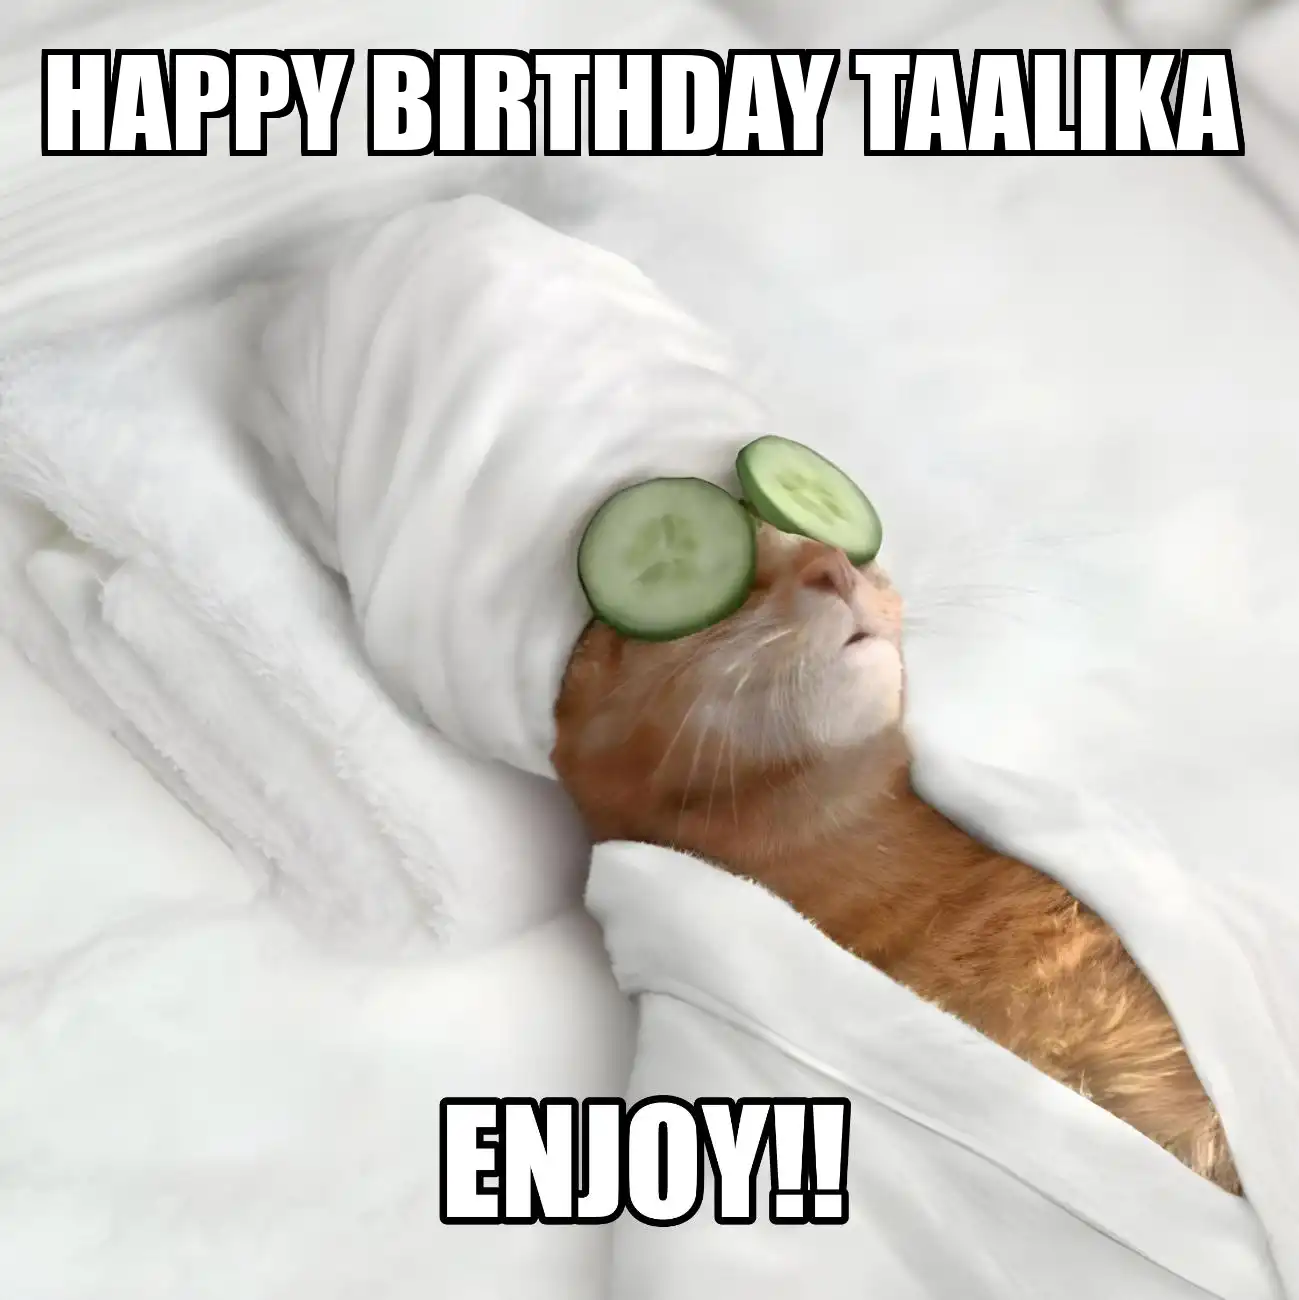 Happy Birthday Taalika Enjoy Cat Meme